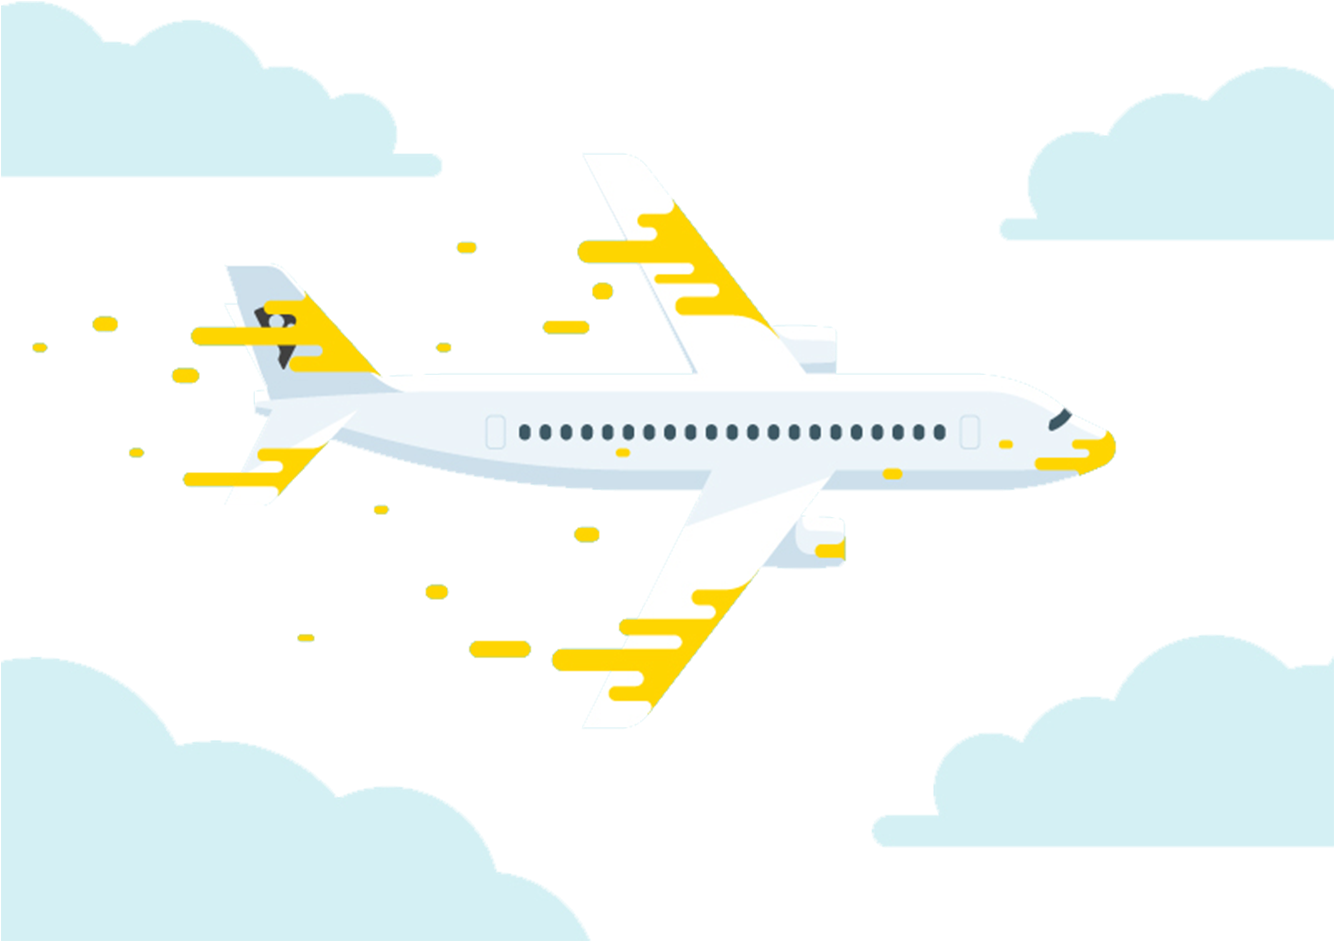 Airplane Aircraft Illustration - Airplane Aircraft Illustration (1333x1000)